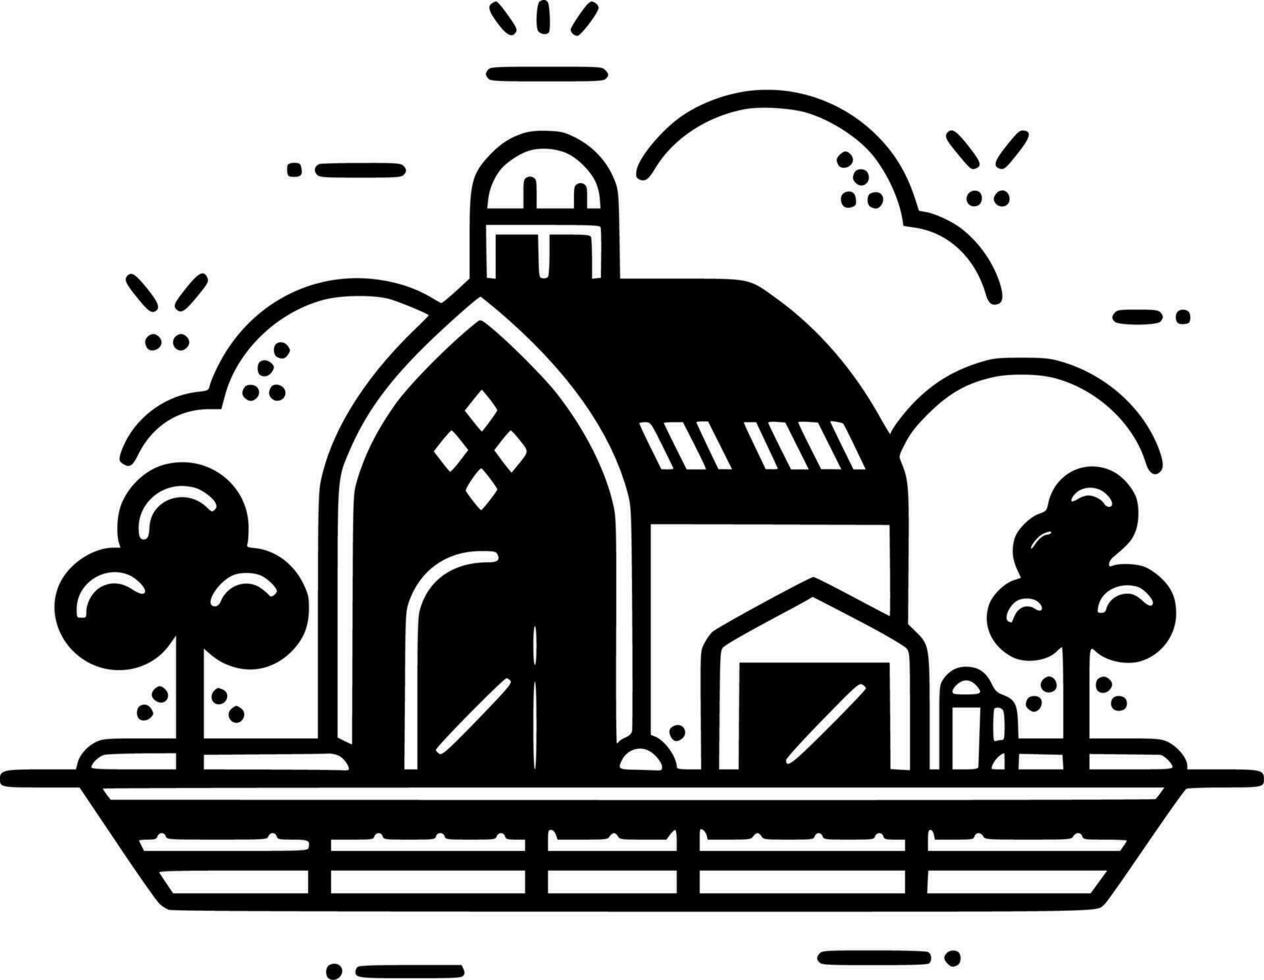 Farm, Minimalist and Simple Silhouette - Vector illustration